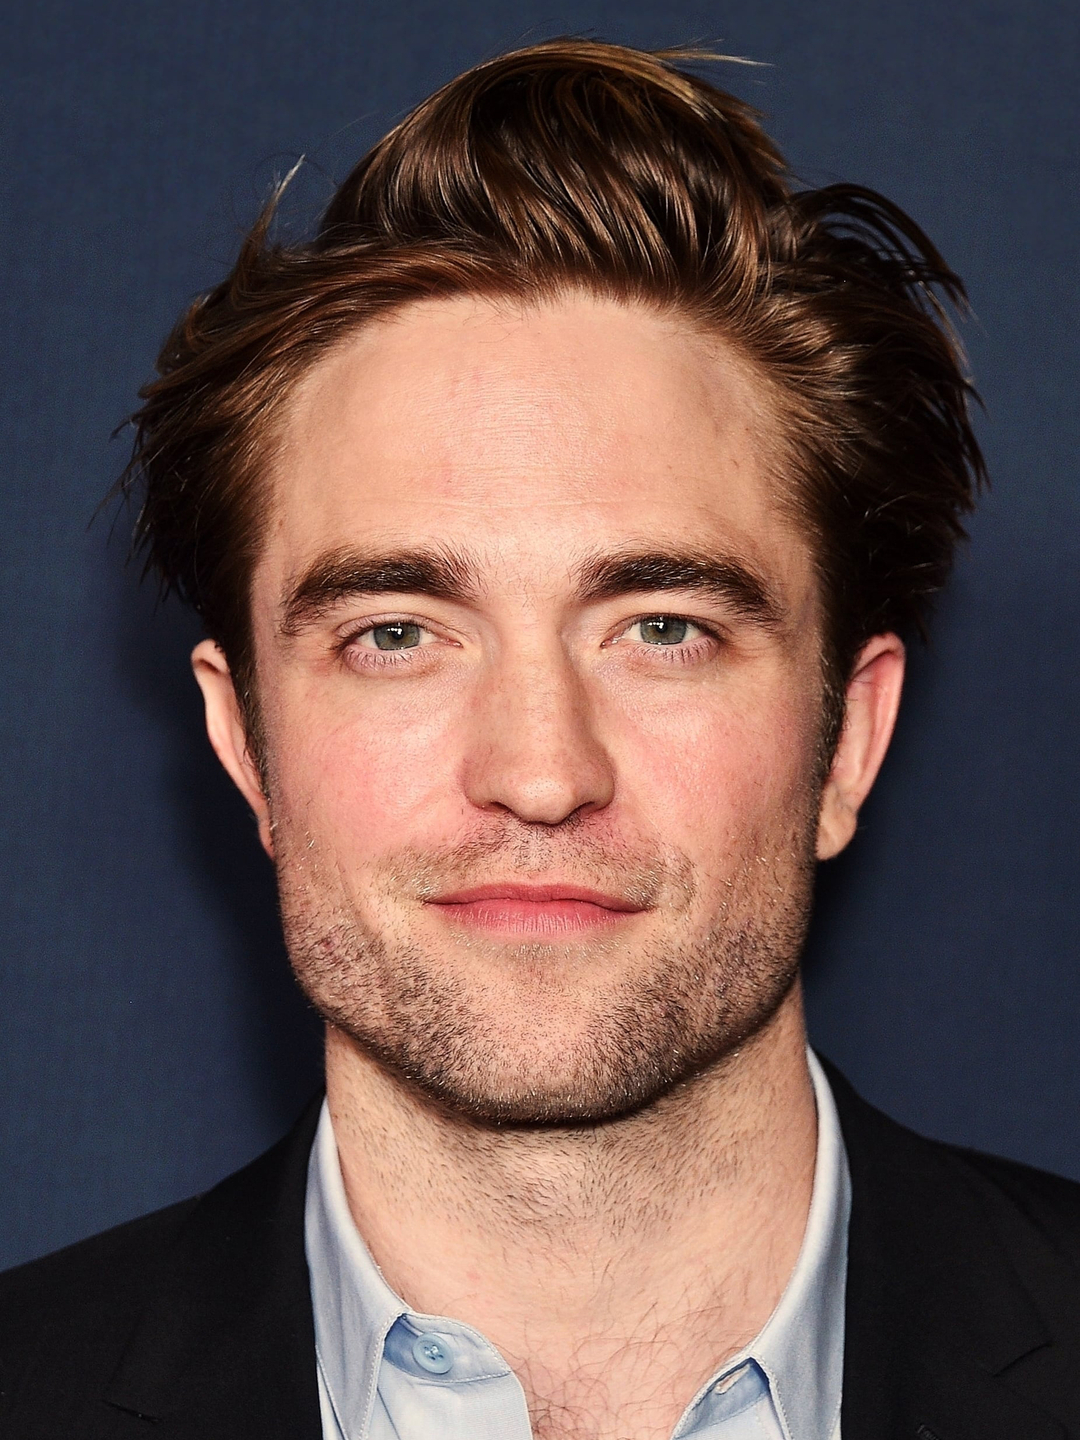 Robert Pattinson biography